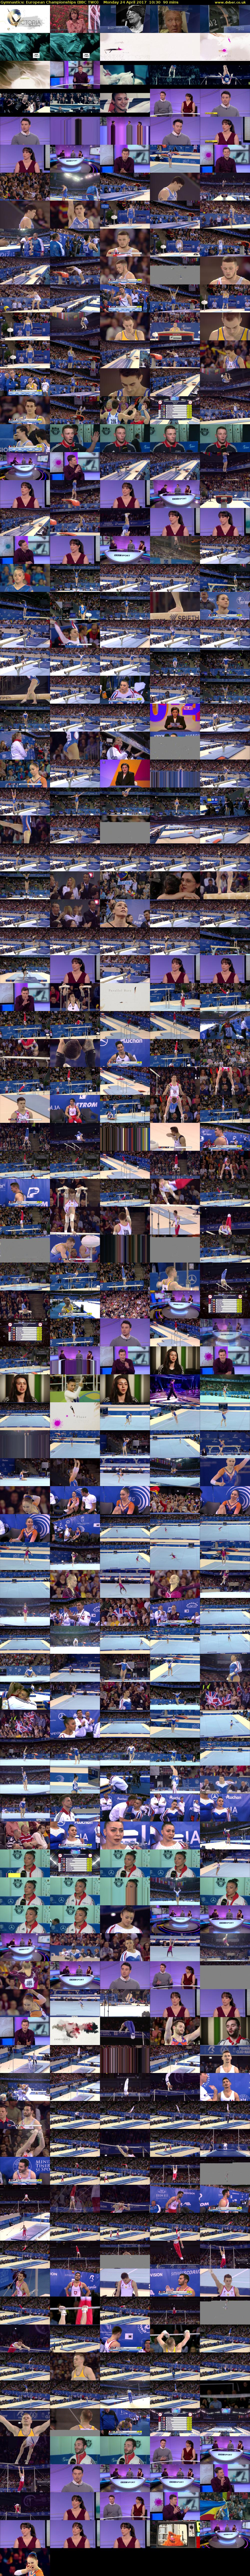 Gymnastics: European Championships (BBC TWO) Monday 24 April 2017 10:30 - 12:00